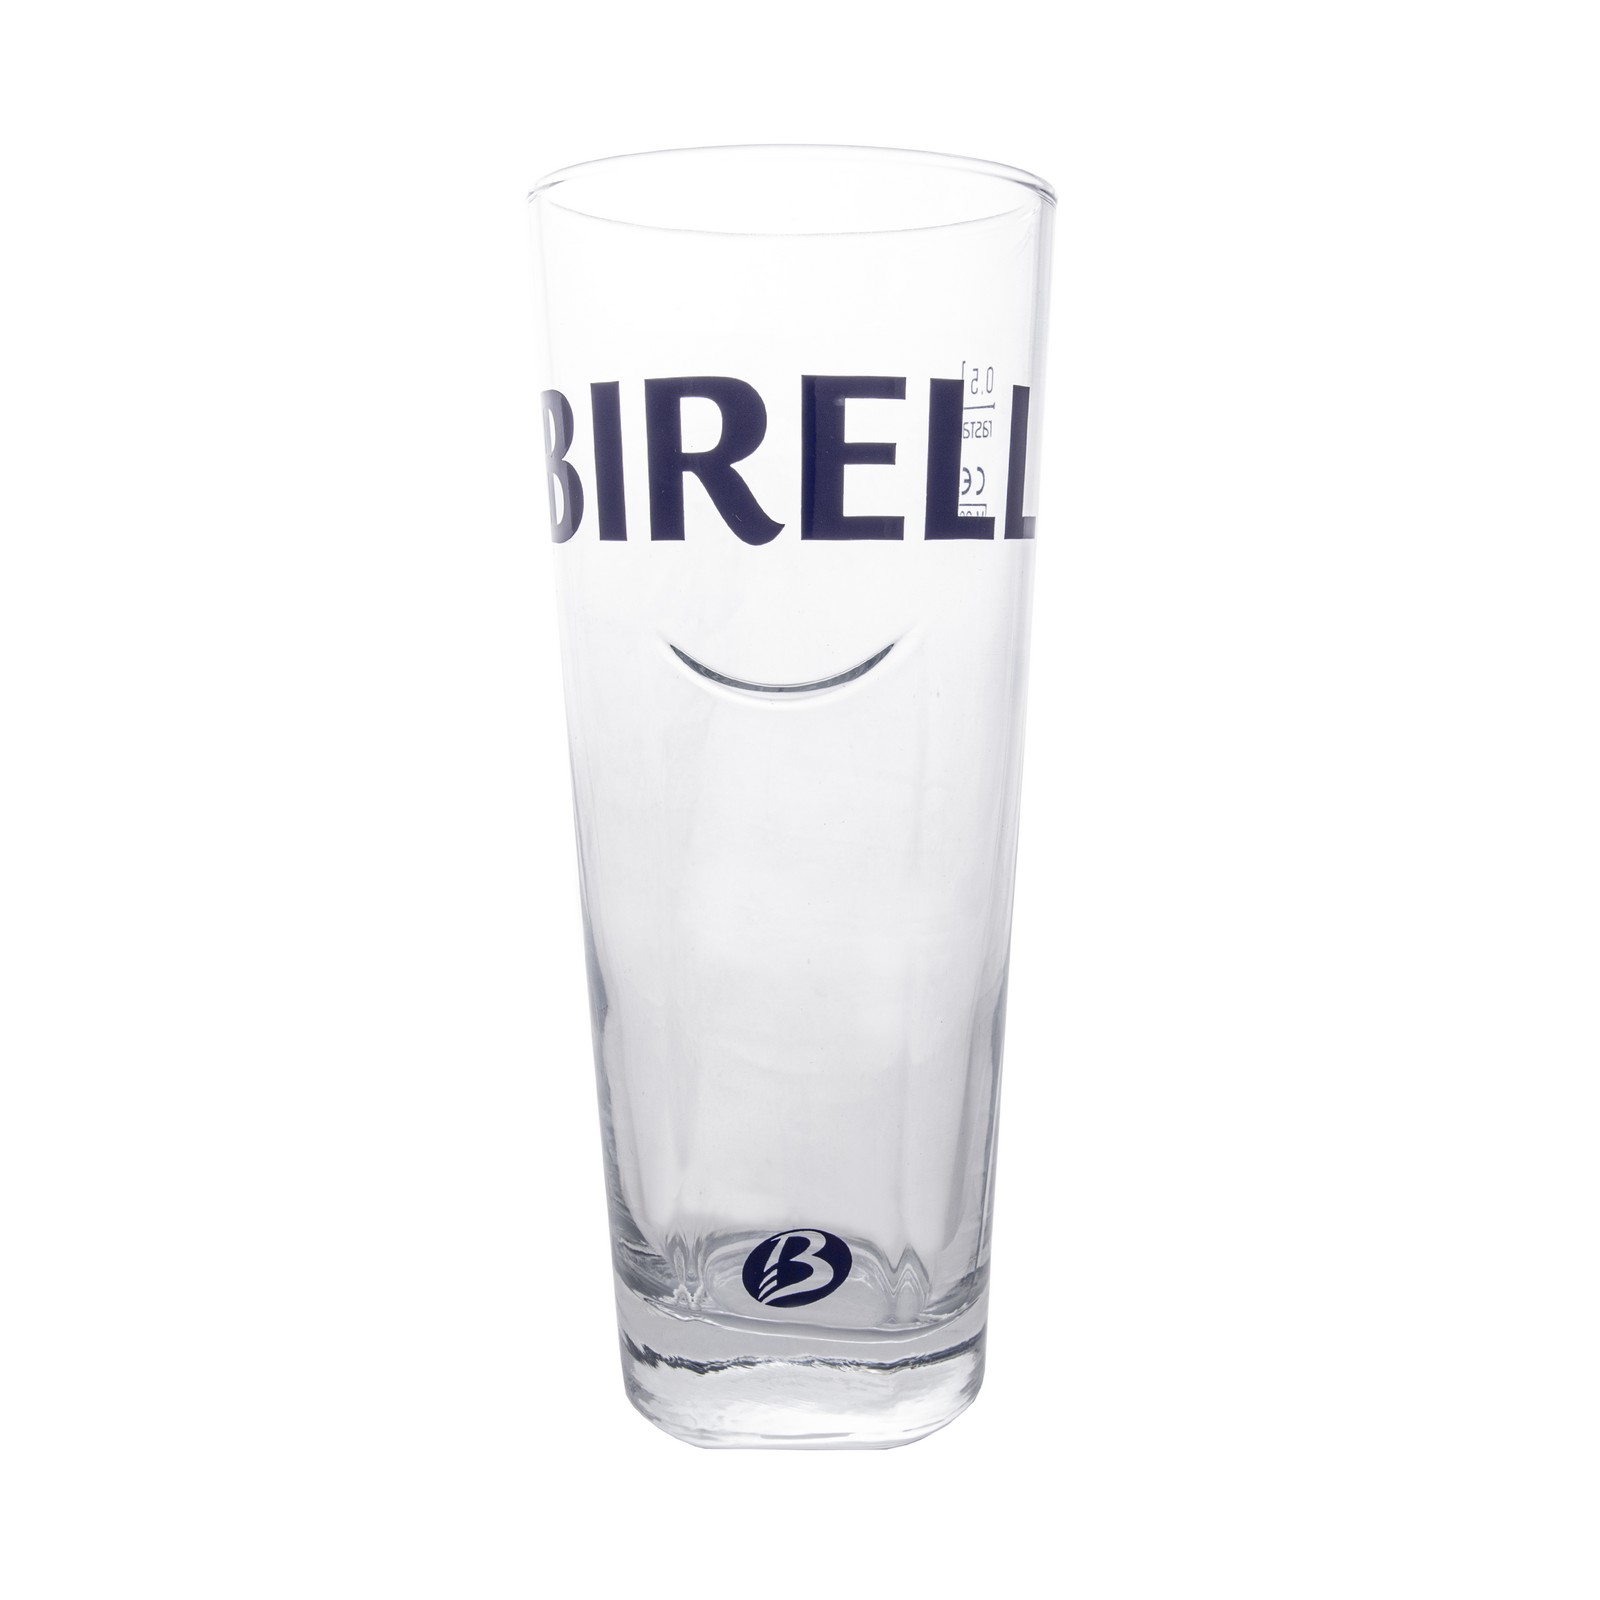 0.3 l Birell Glass with inscription